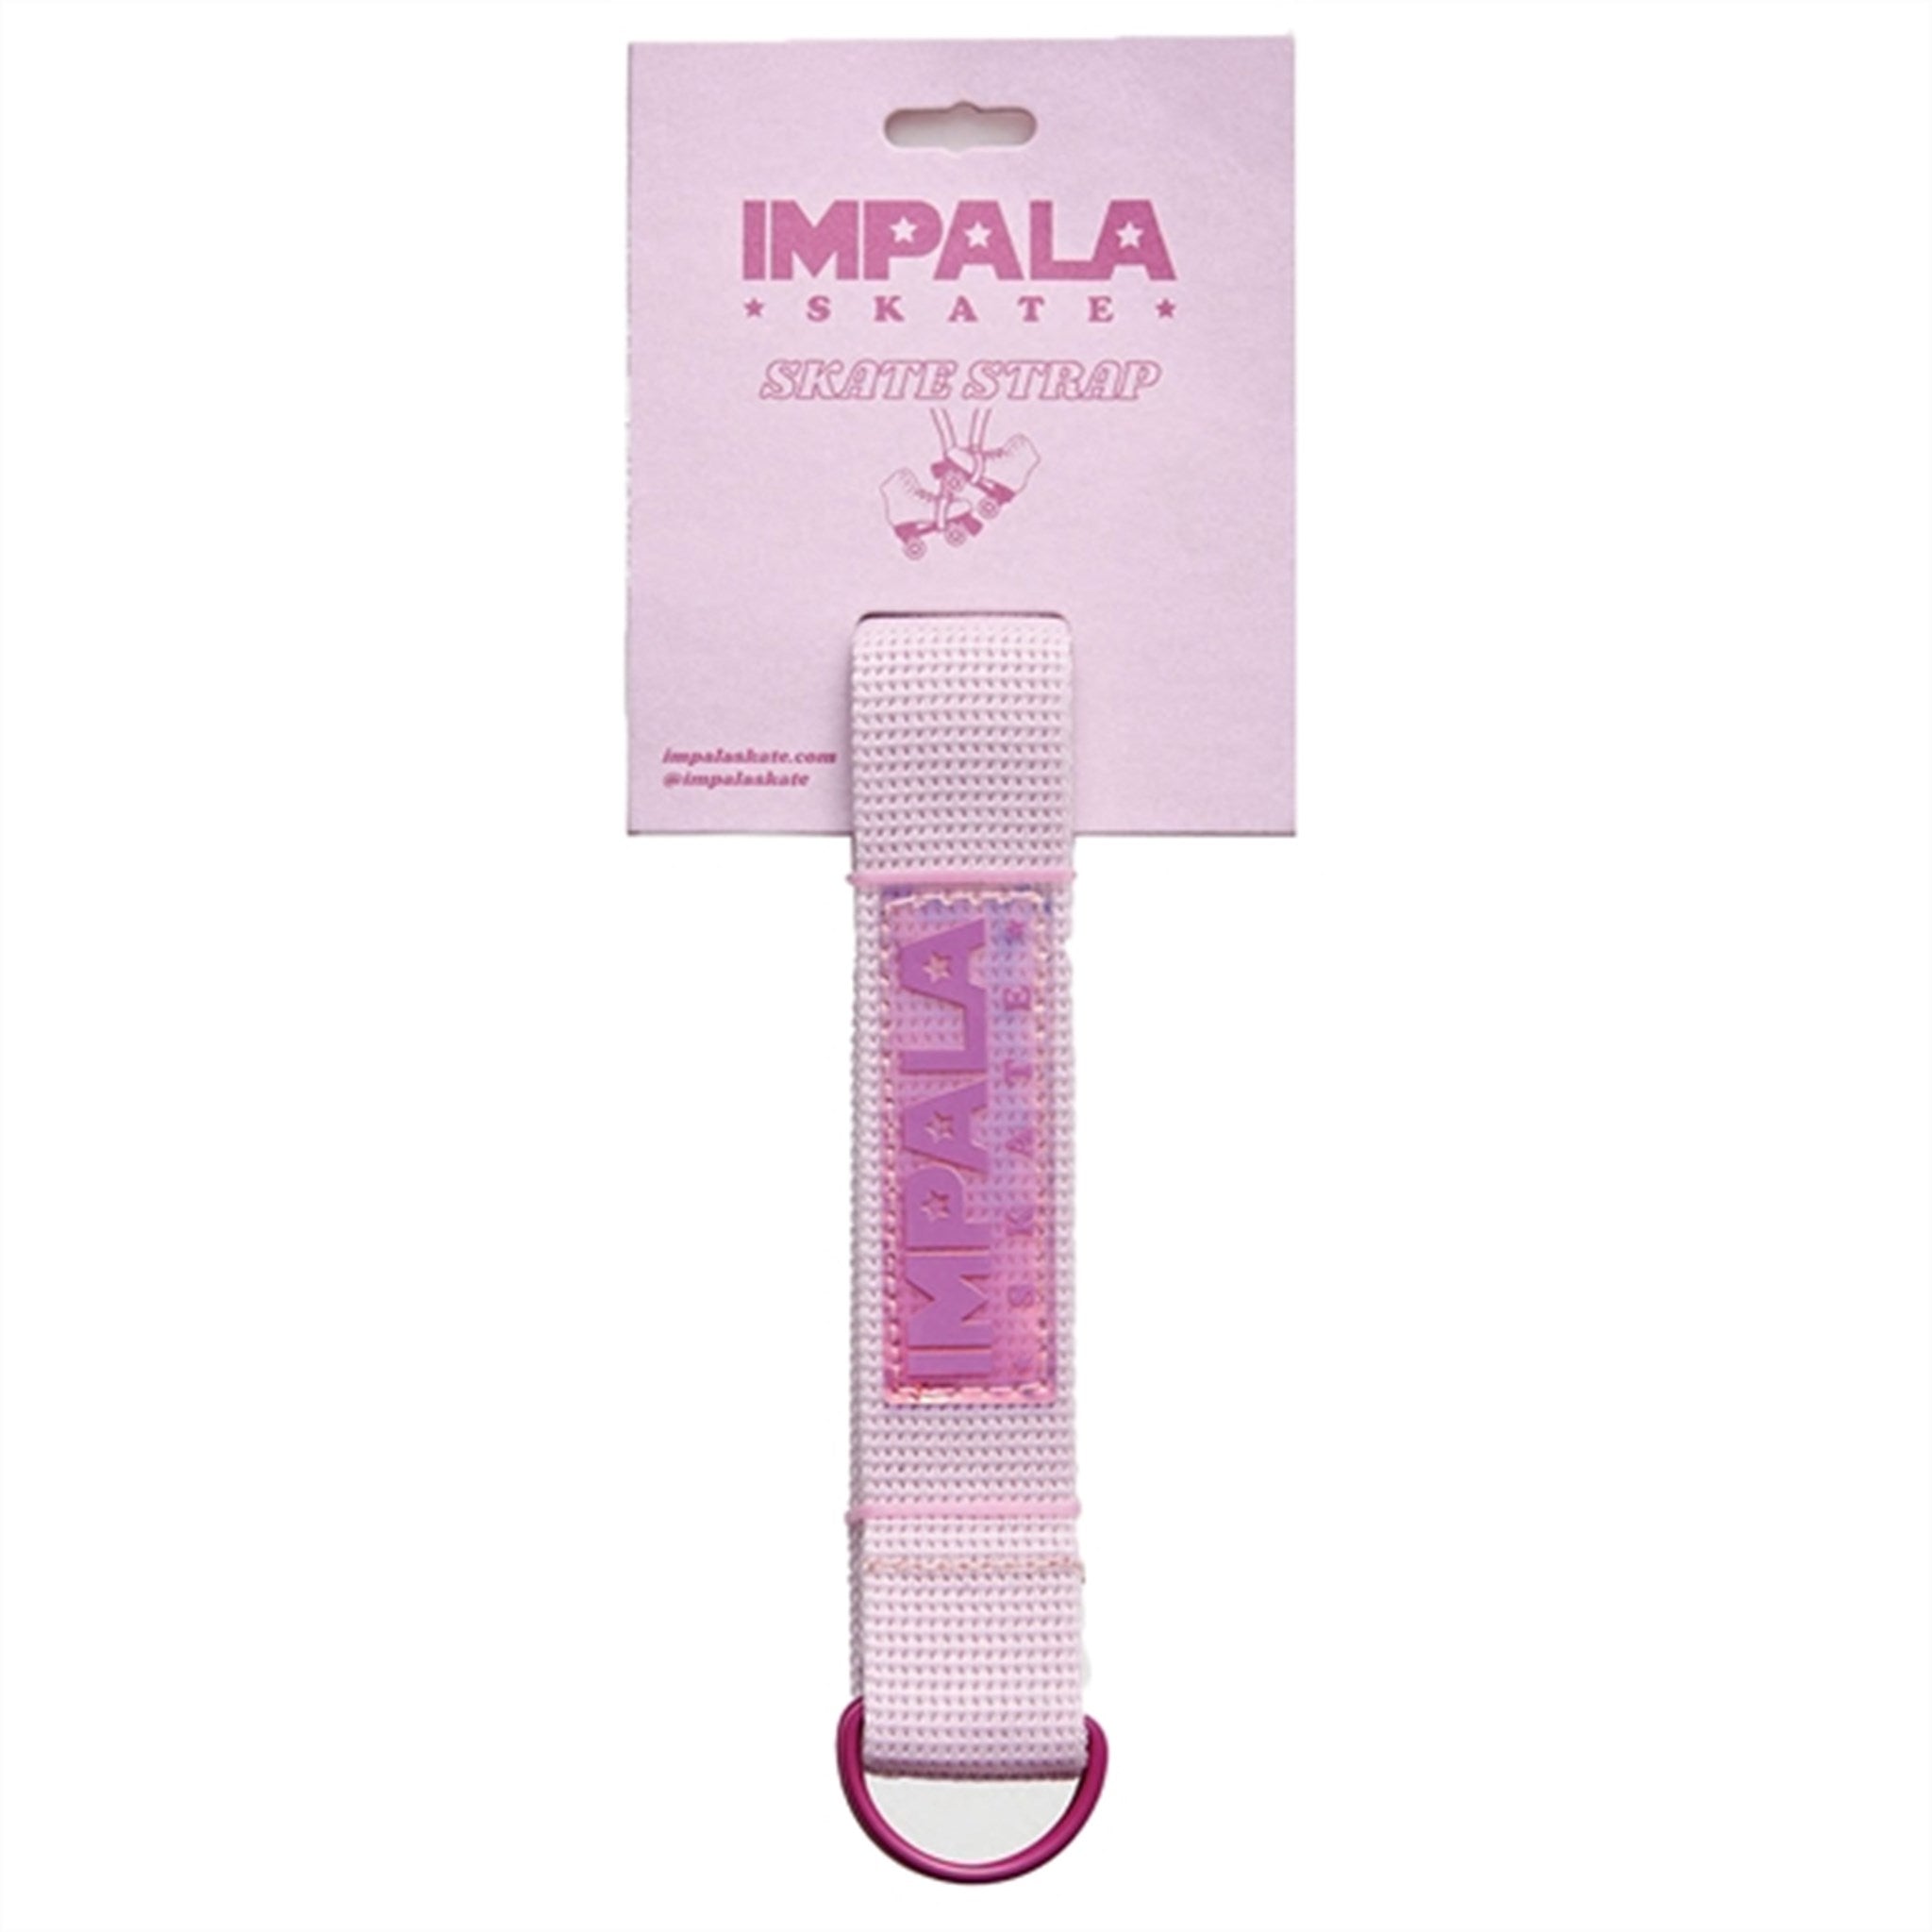 Impala Skate Strap Pink